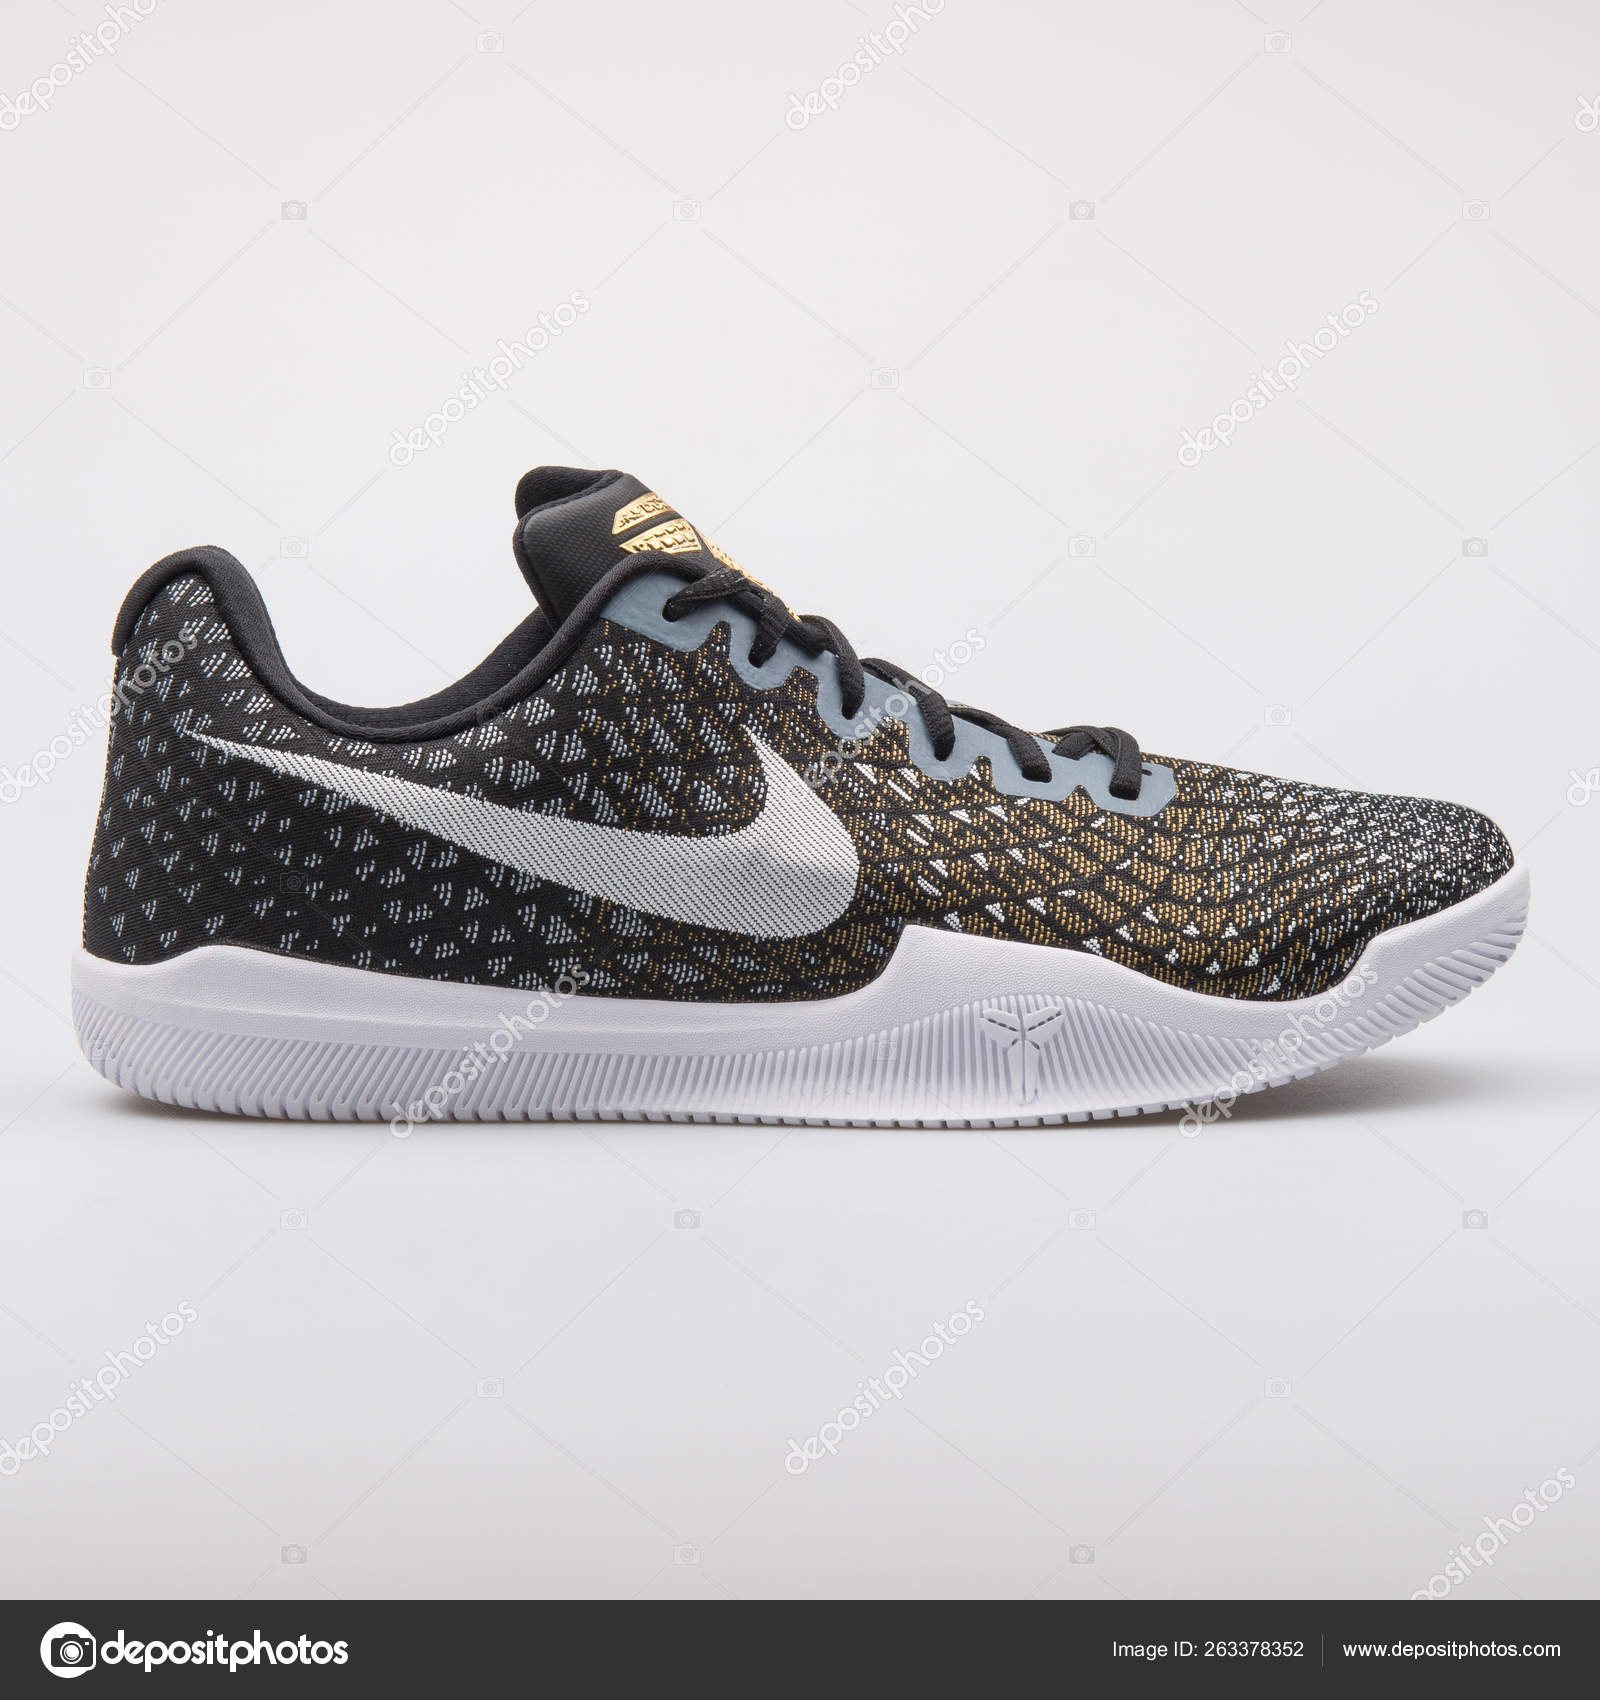 Nike Kobe Mamba Instinct black and grey 